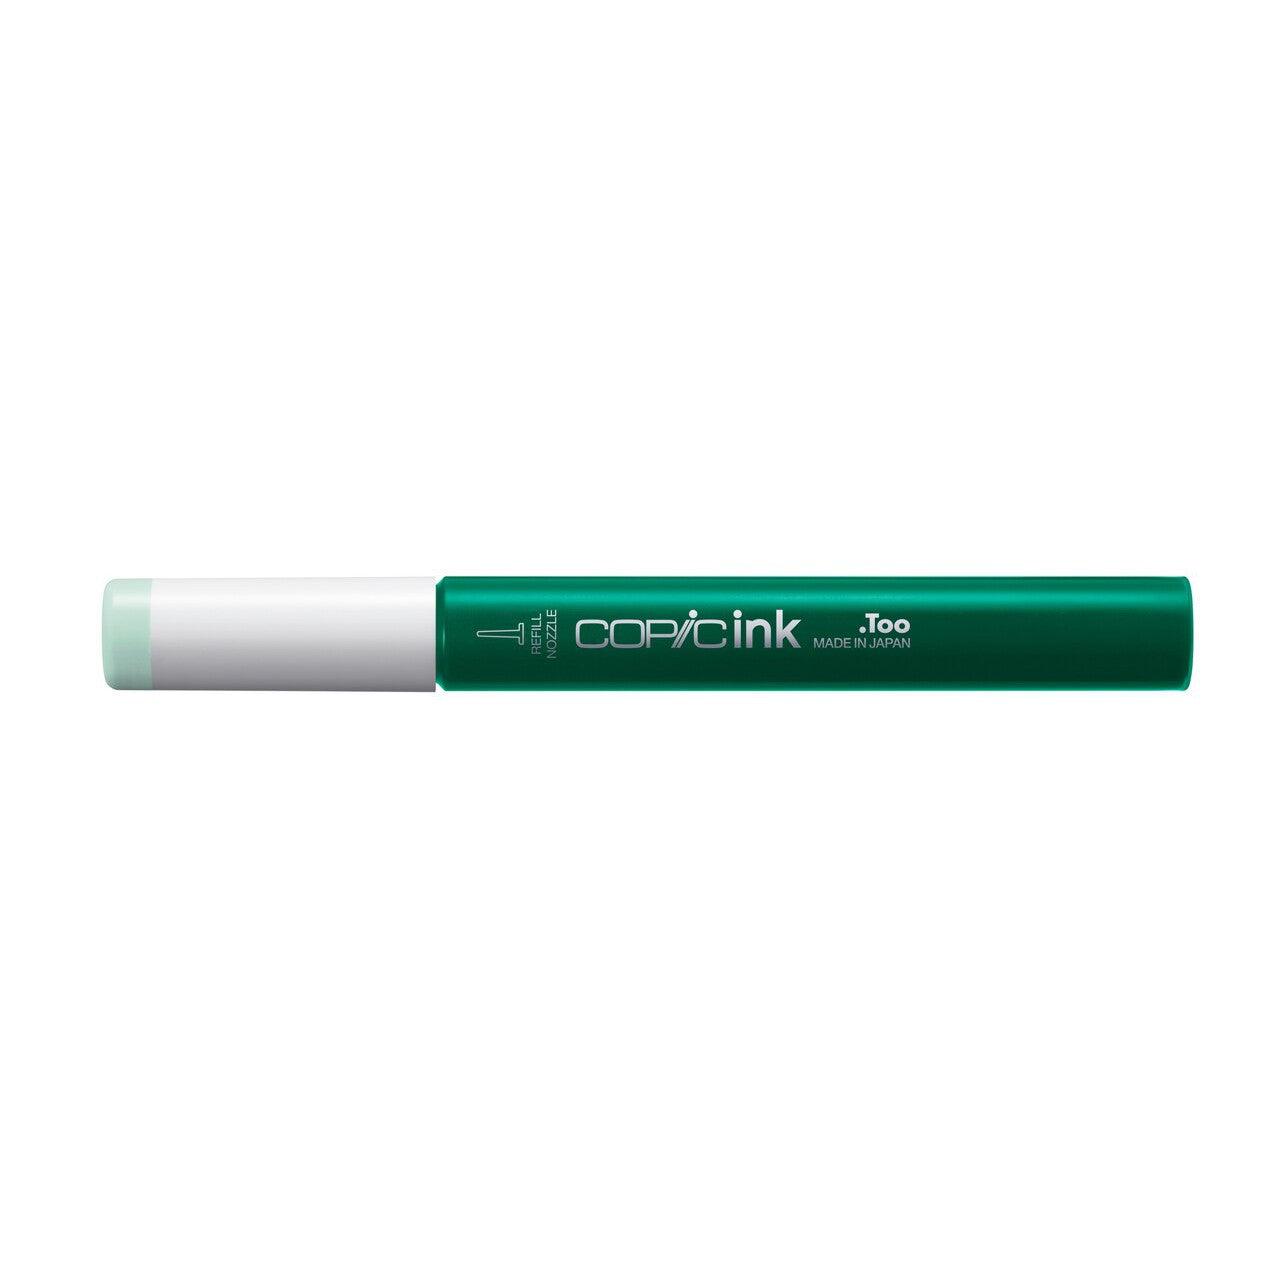 Copic - Ink Refill - Jade Green - G00-ScrapbookPal